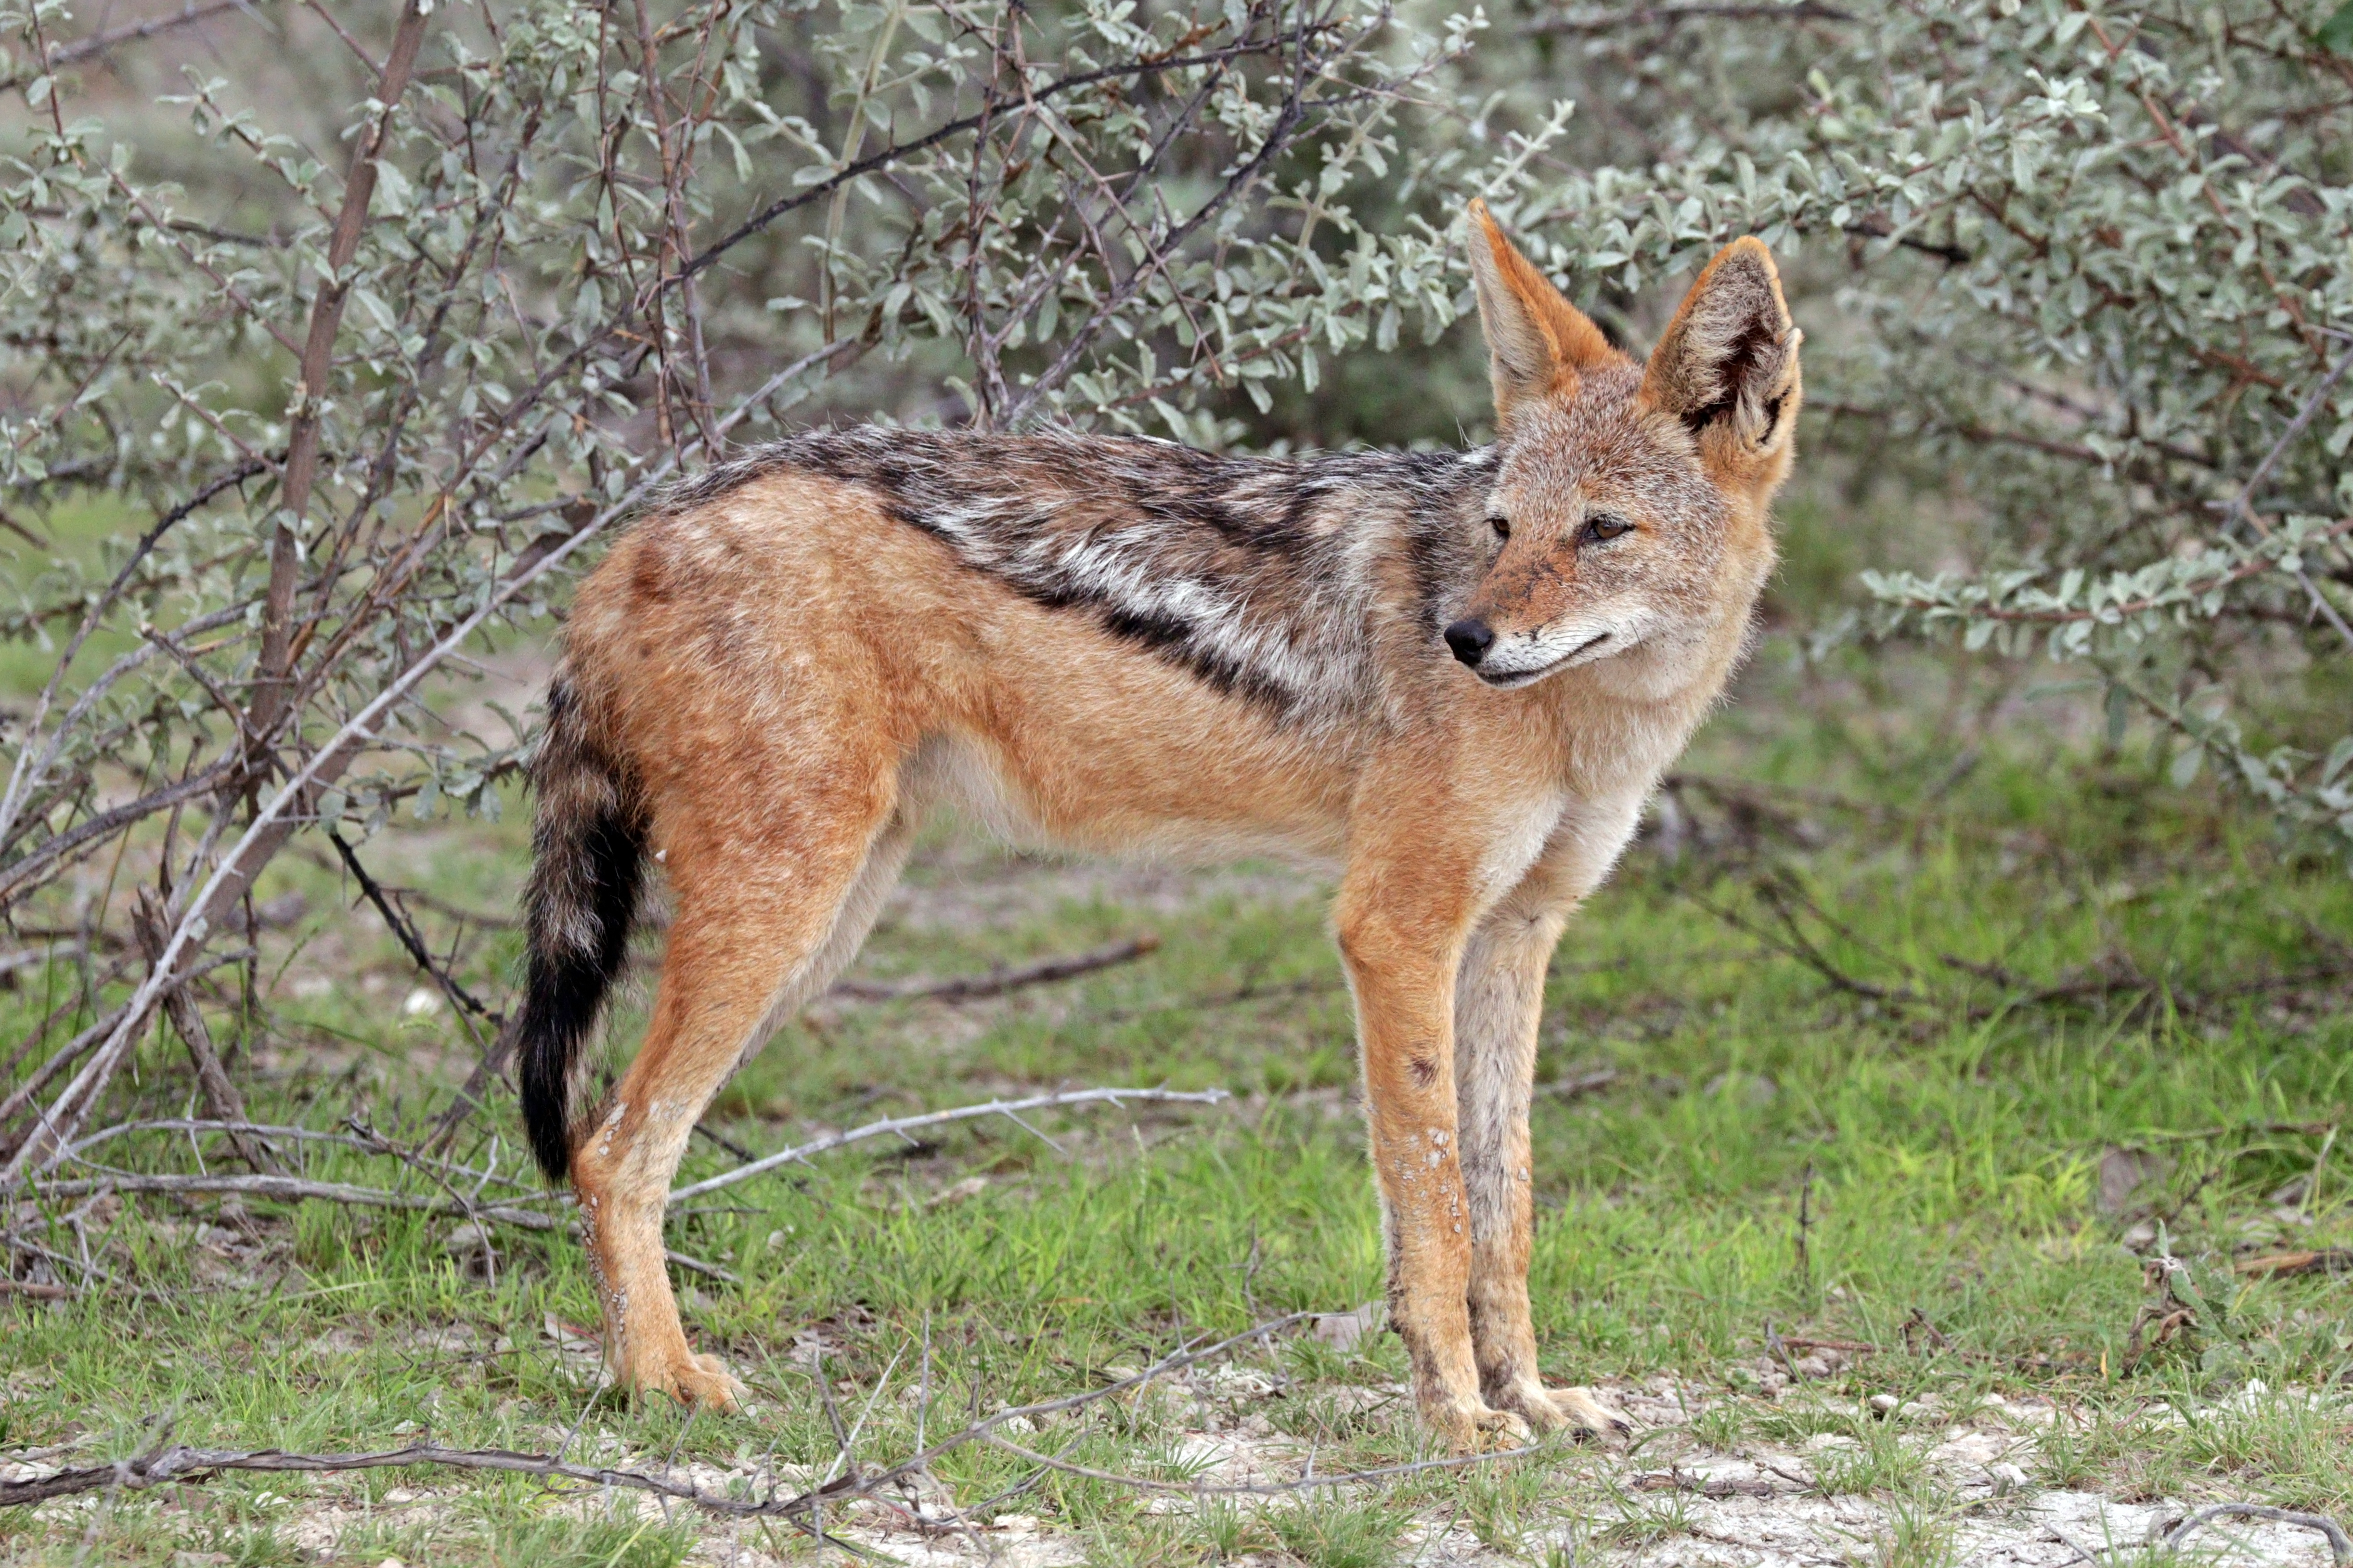 A black-backed jackal